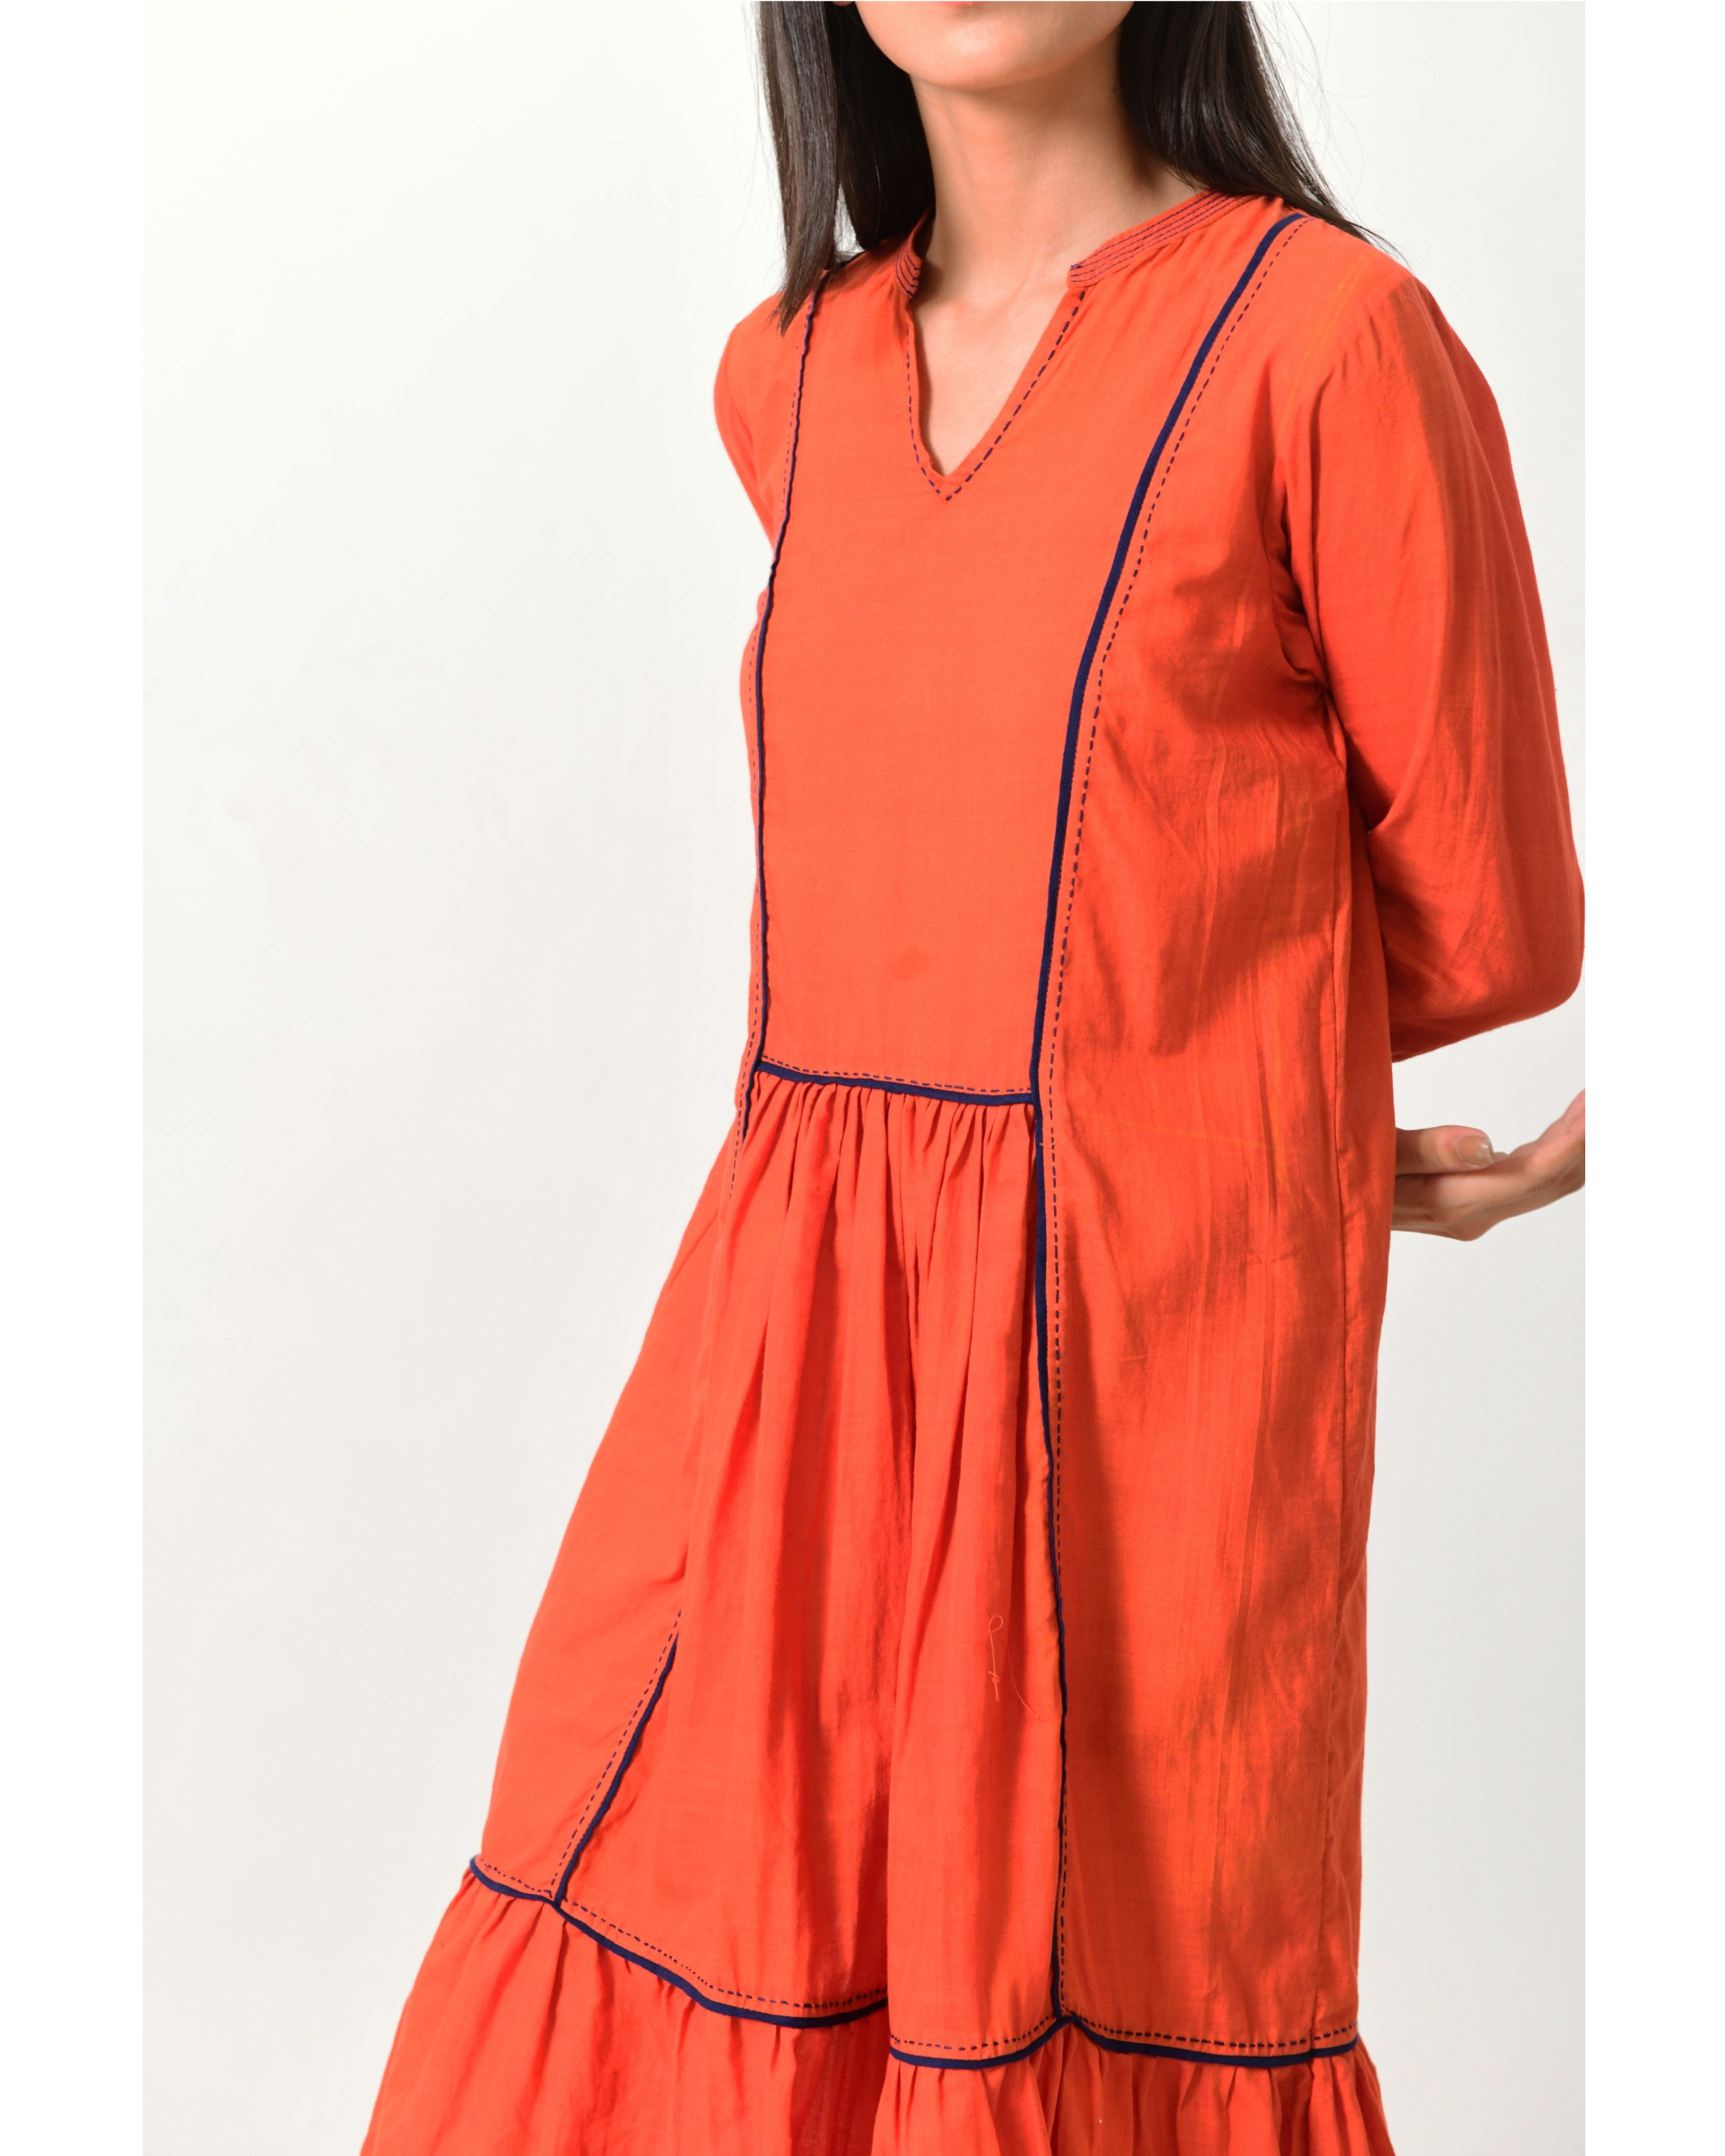 Rustic orange high low gathered midi dress by Rias | The Secret Label